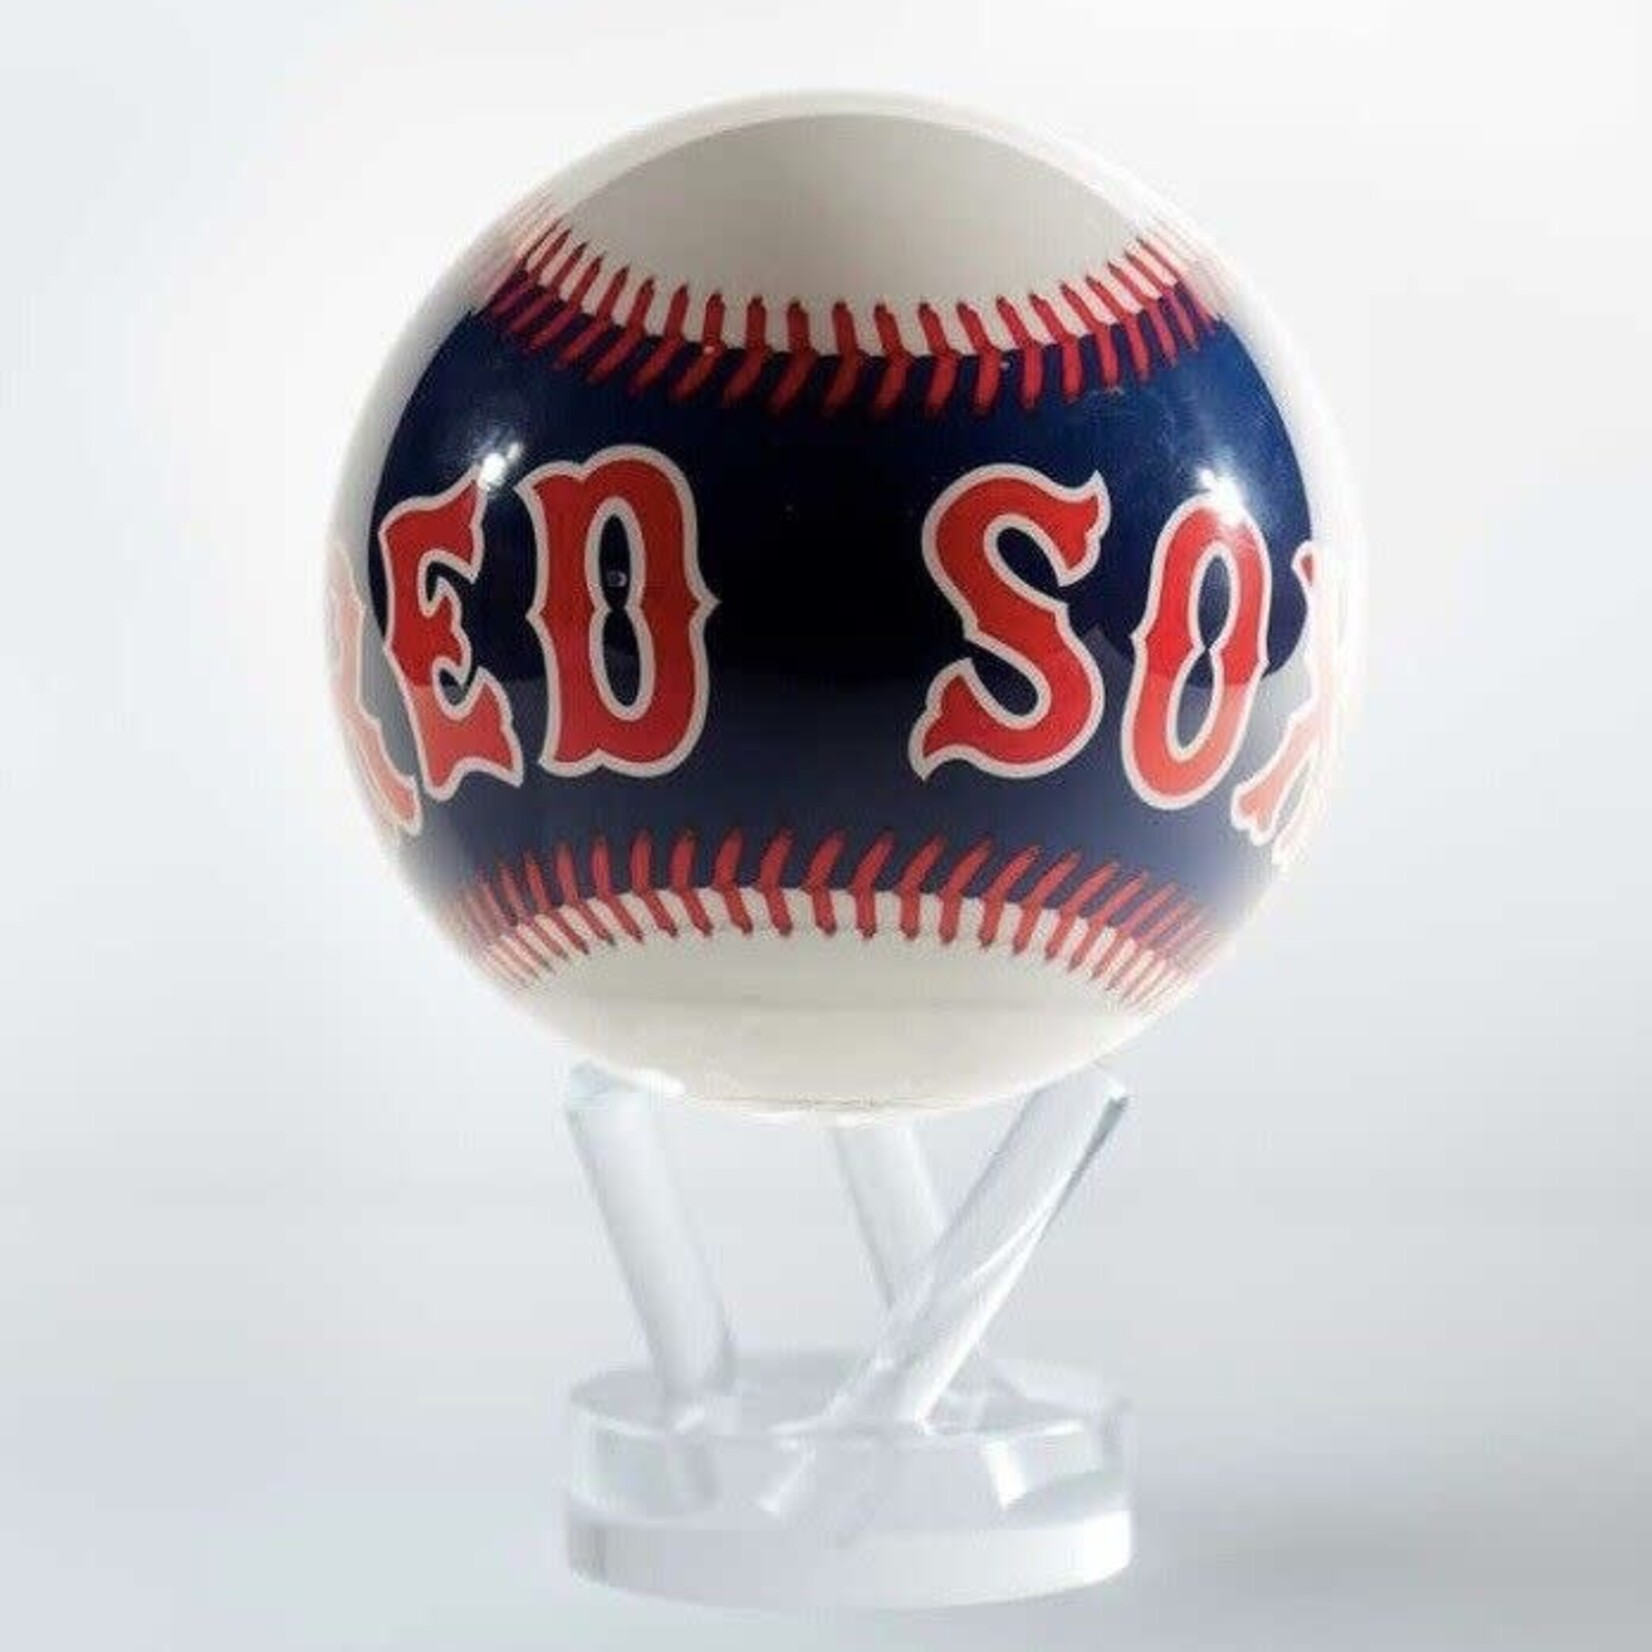 Mova Globes MLB RED SOX (MOVA Globe 4.5" w/Acrylic Base)